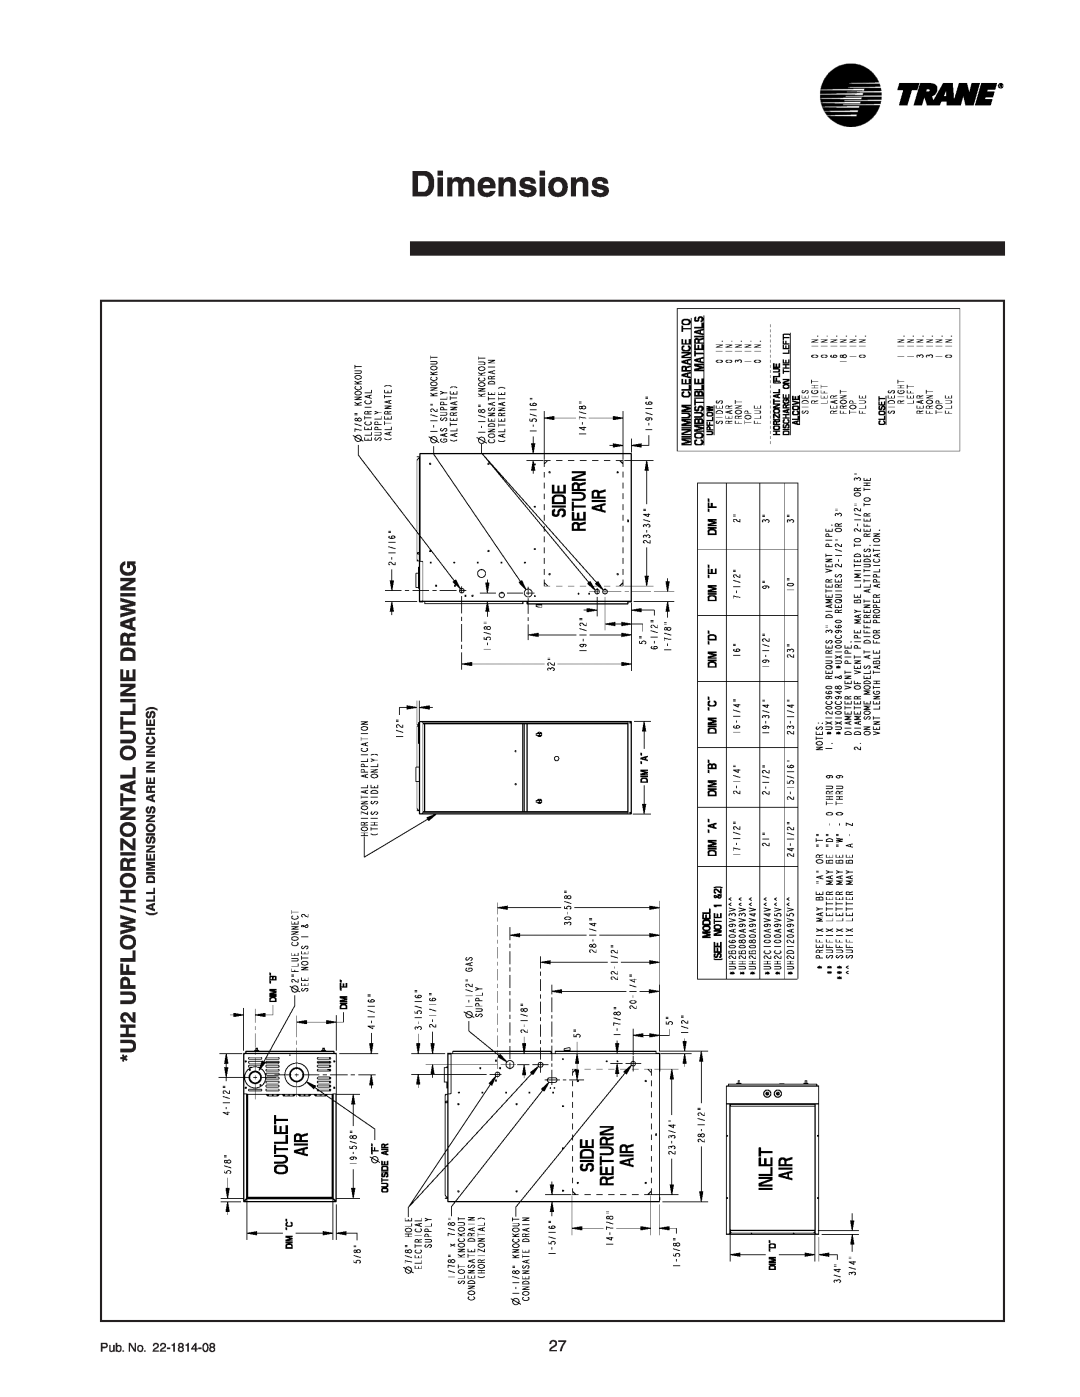 Trane TDH2B080A9V3VA, TUH2C100A9V5VA, TUH2C100A9V4VA, TUH2B080A9V3VA manual Dimensions, Upflow / Horizontal Outline Drawing 